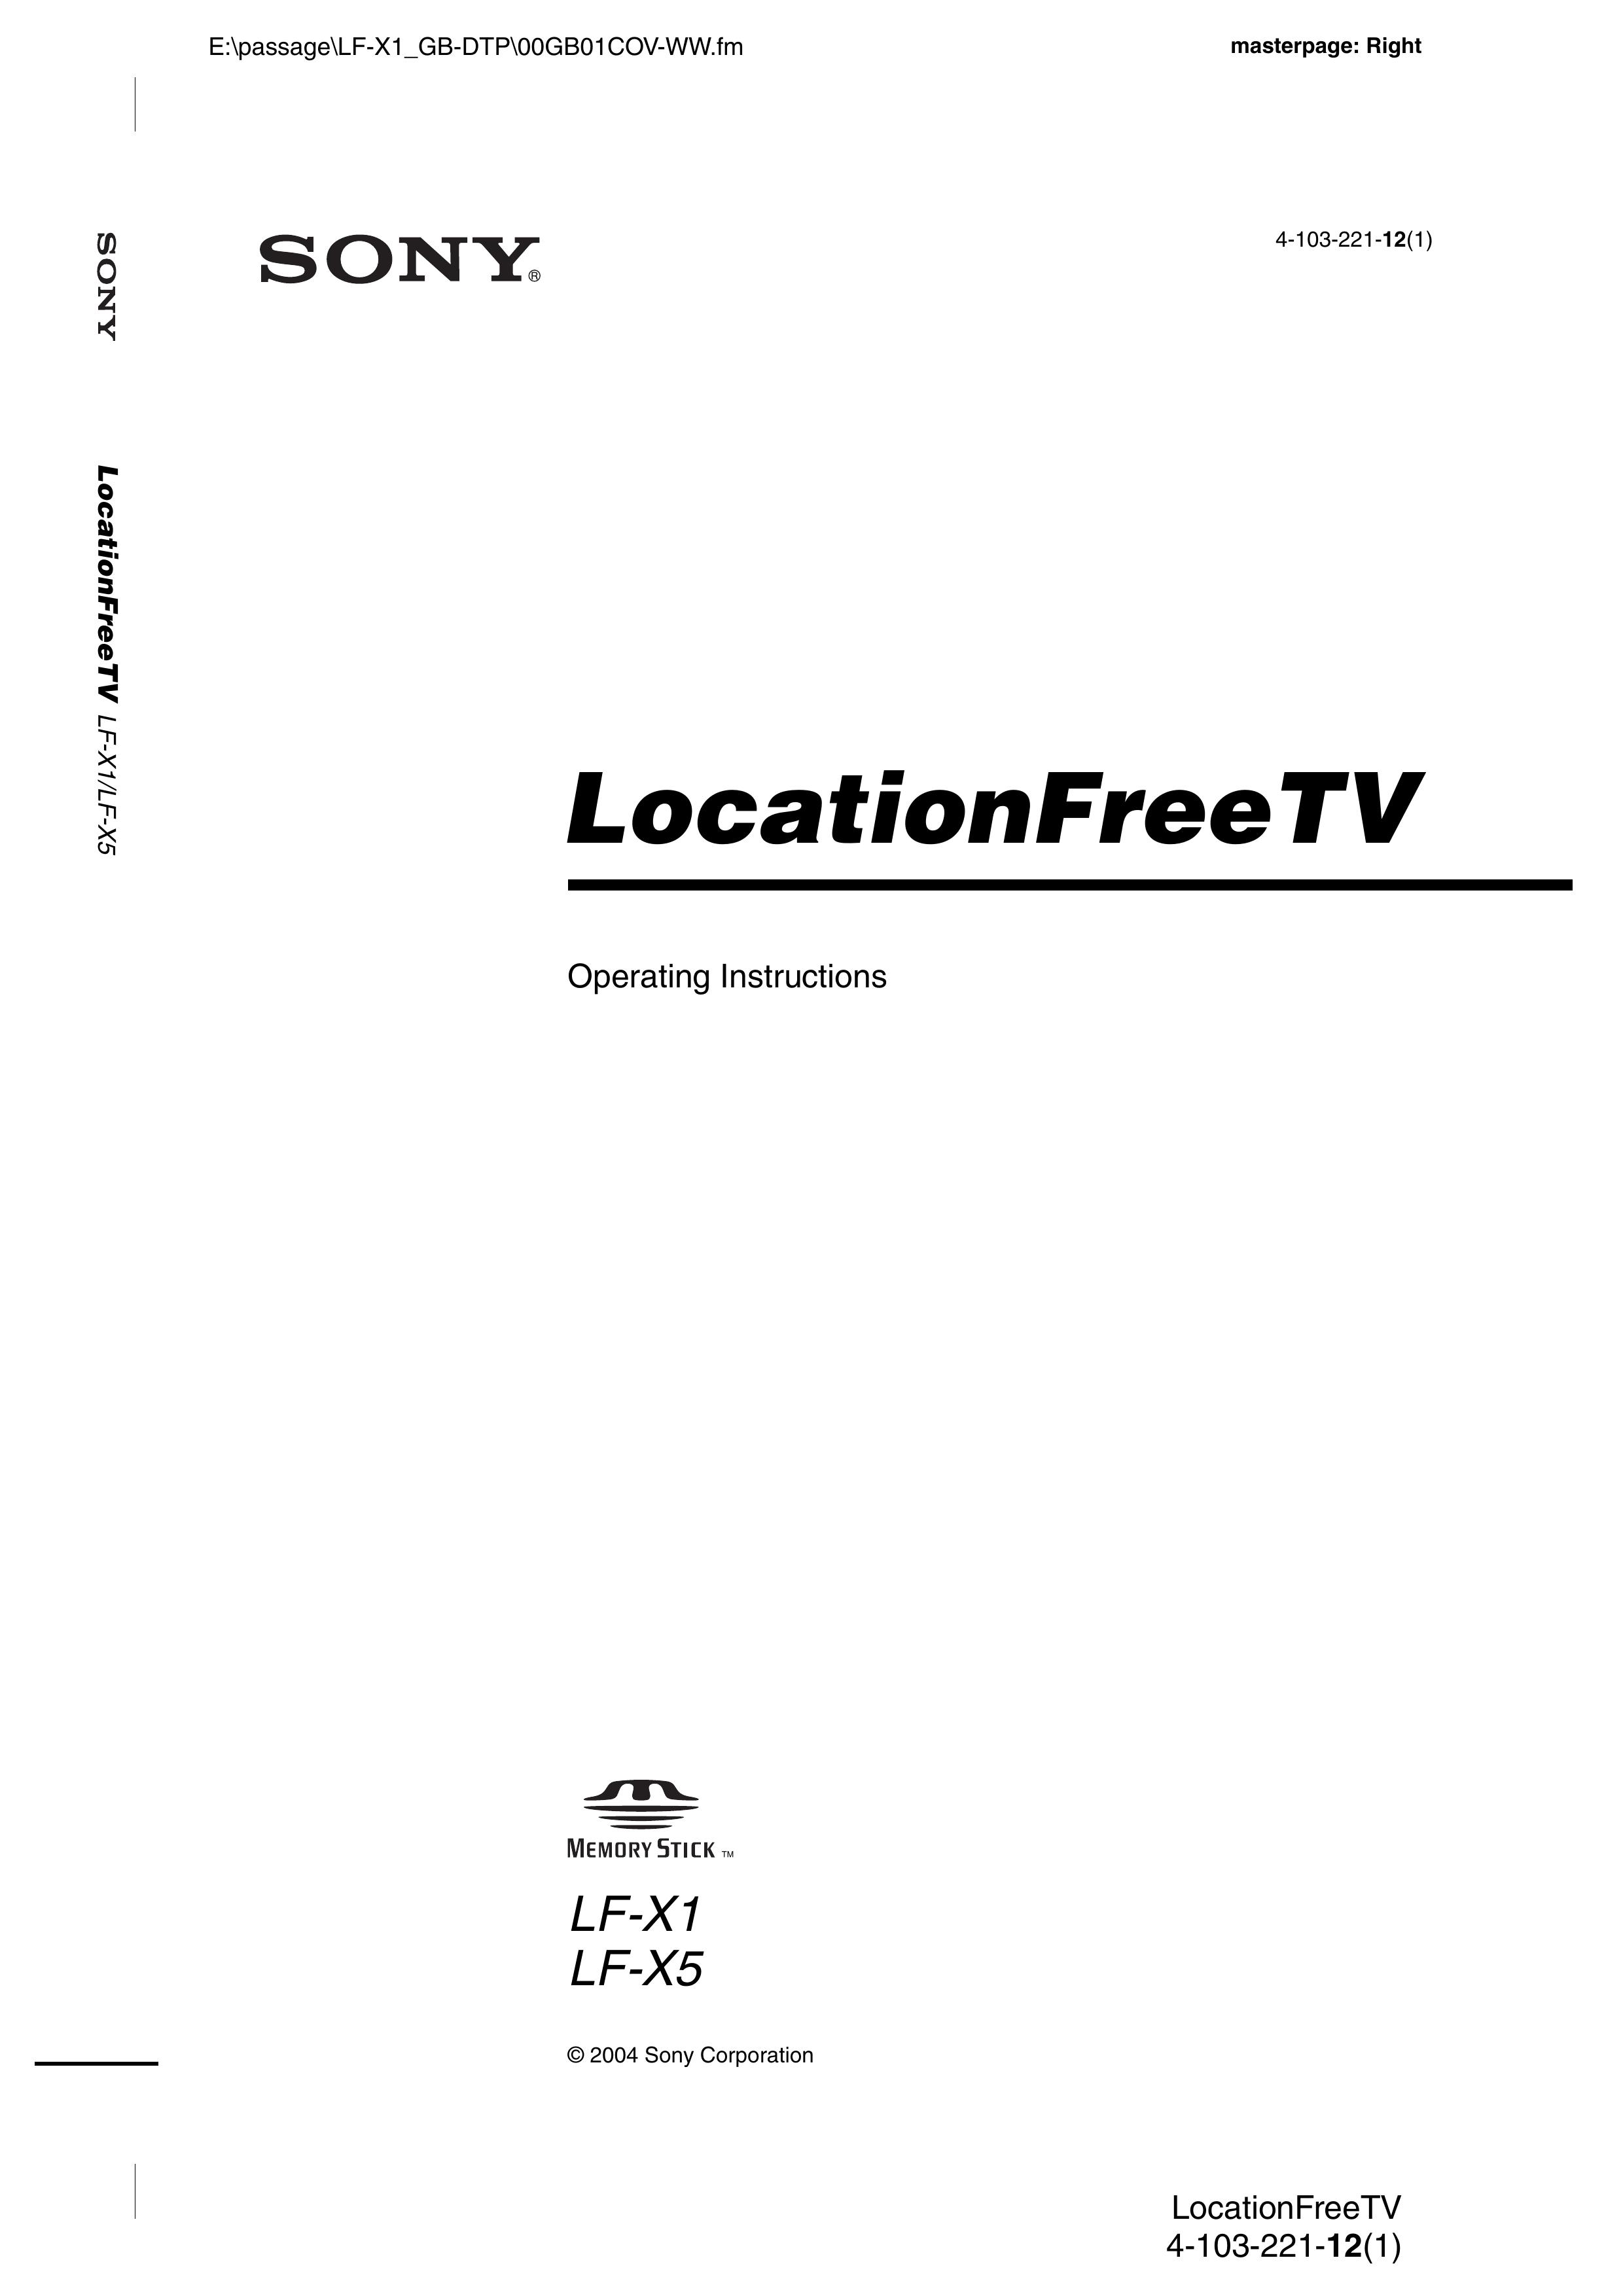 Sony LF-X1, LF-X5 Handheld TV User Manual